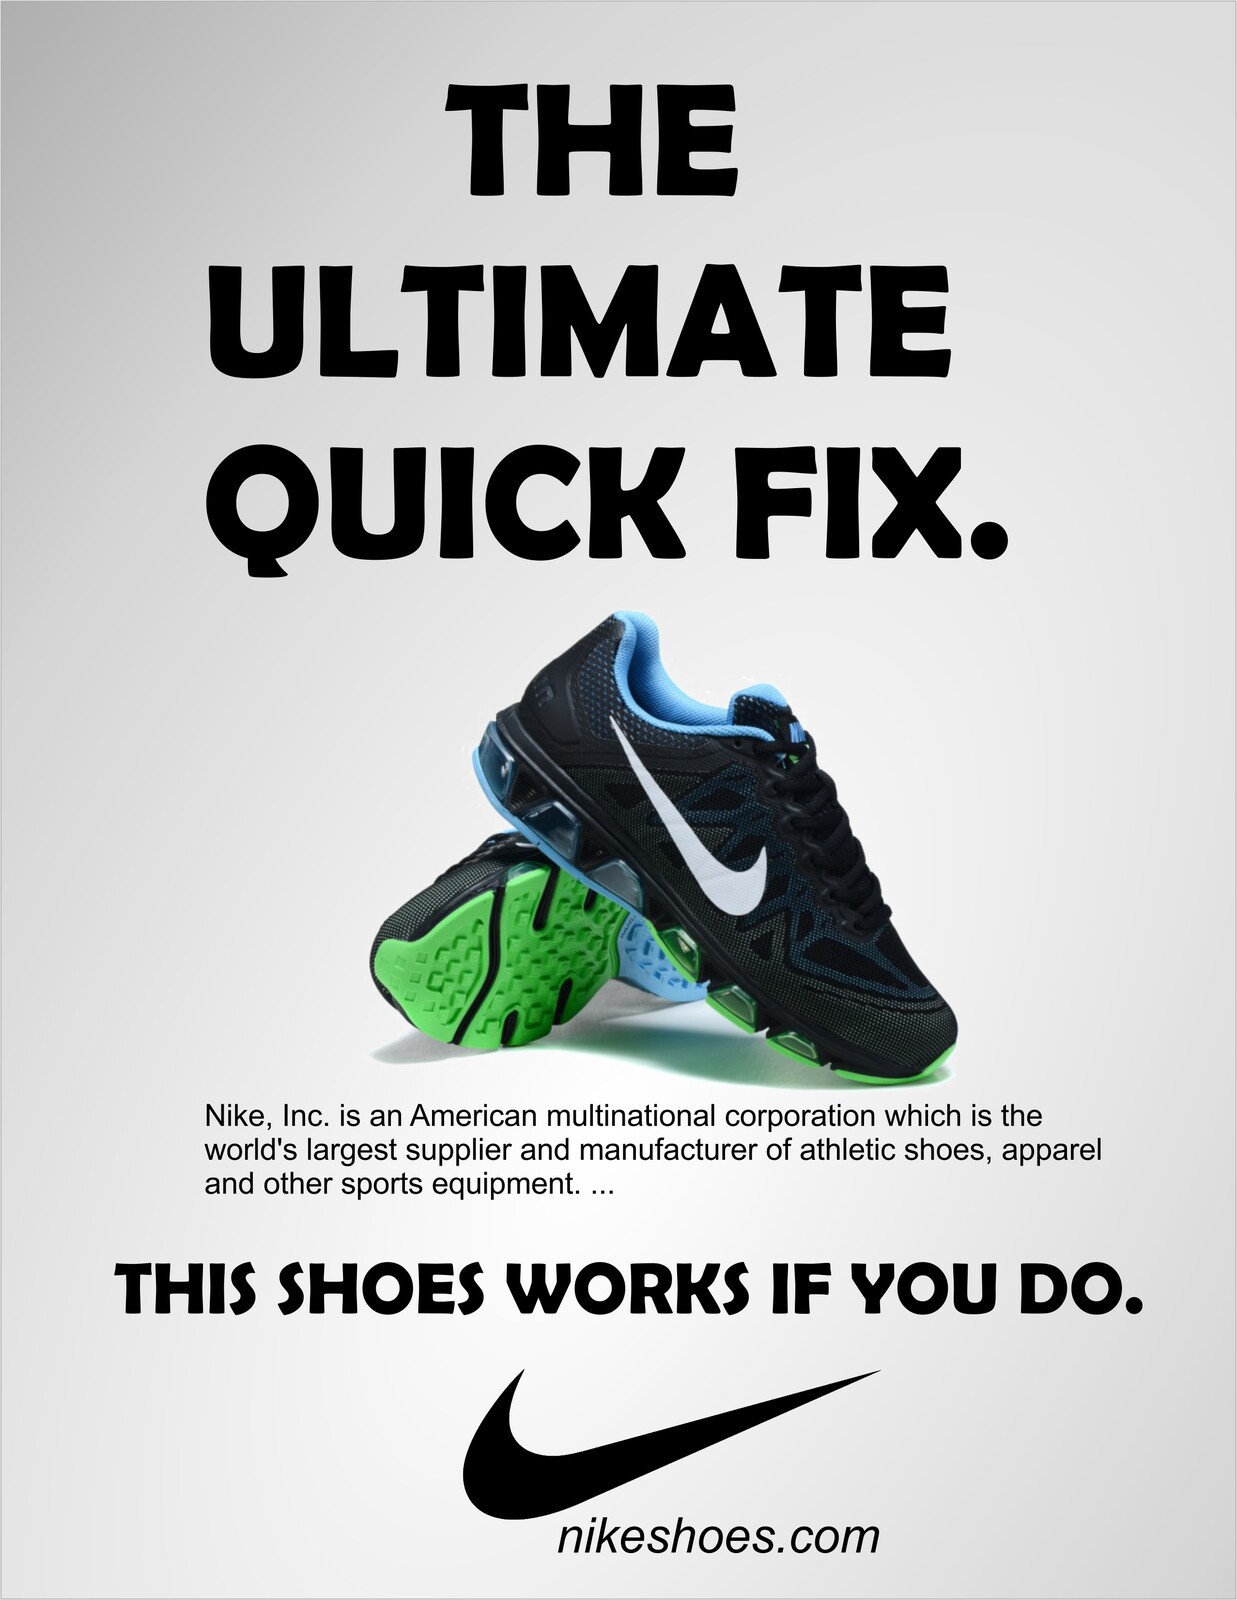 nike shoes advertisement